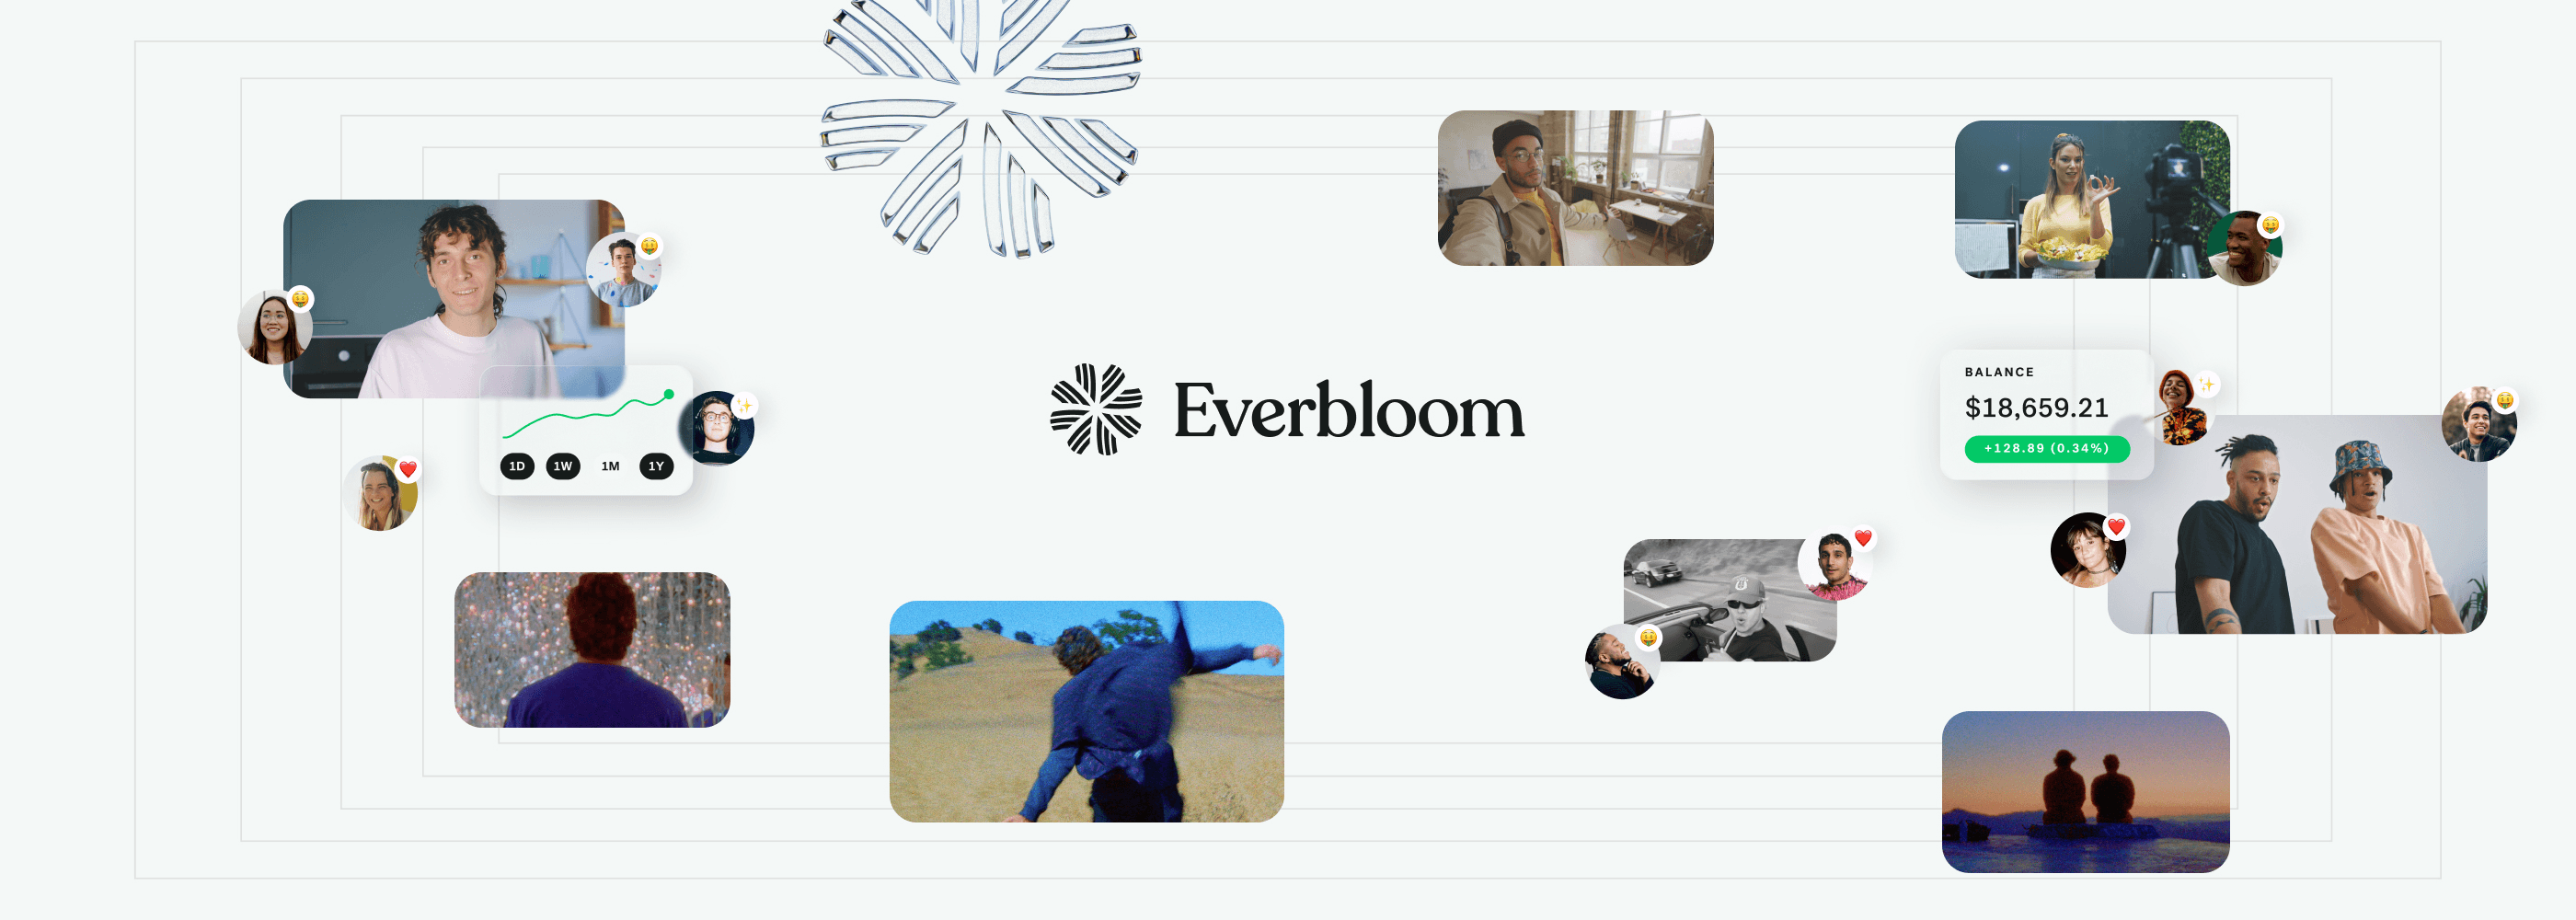 Everbloom バナー